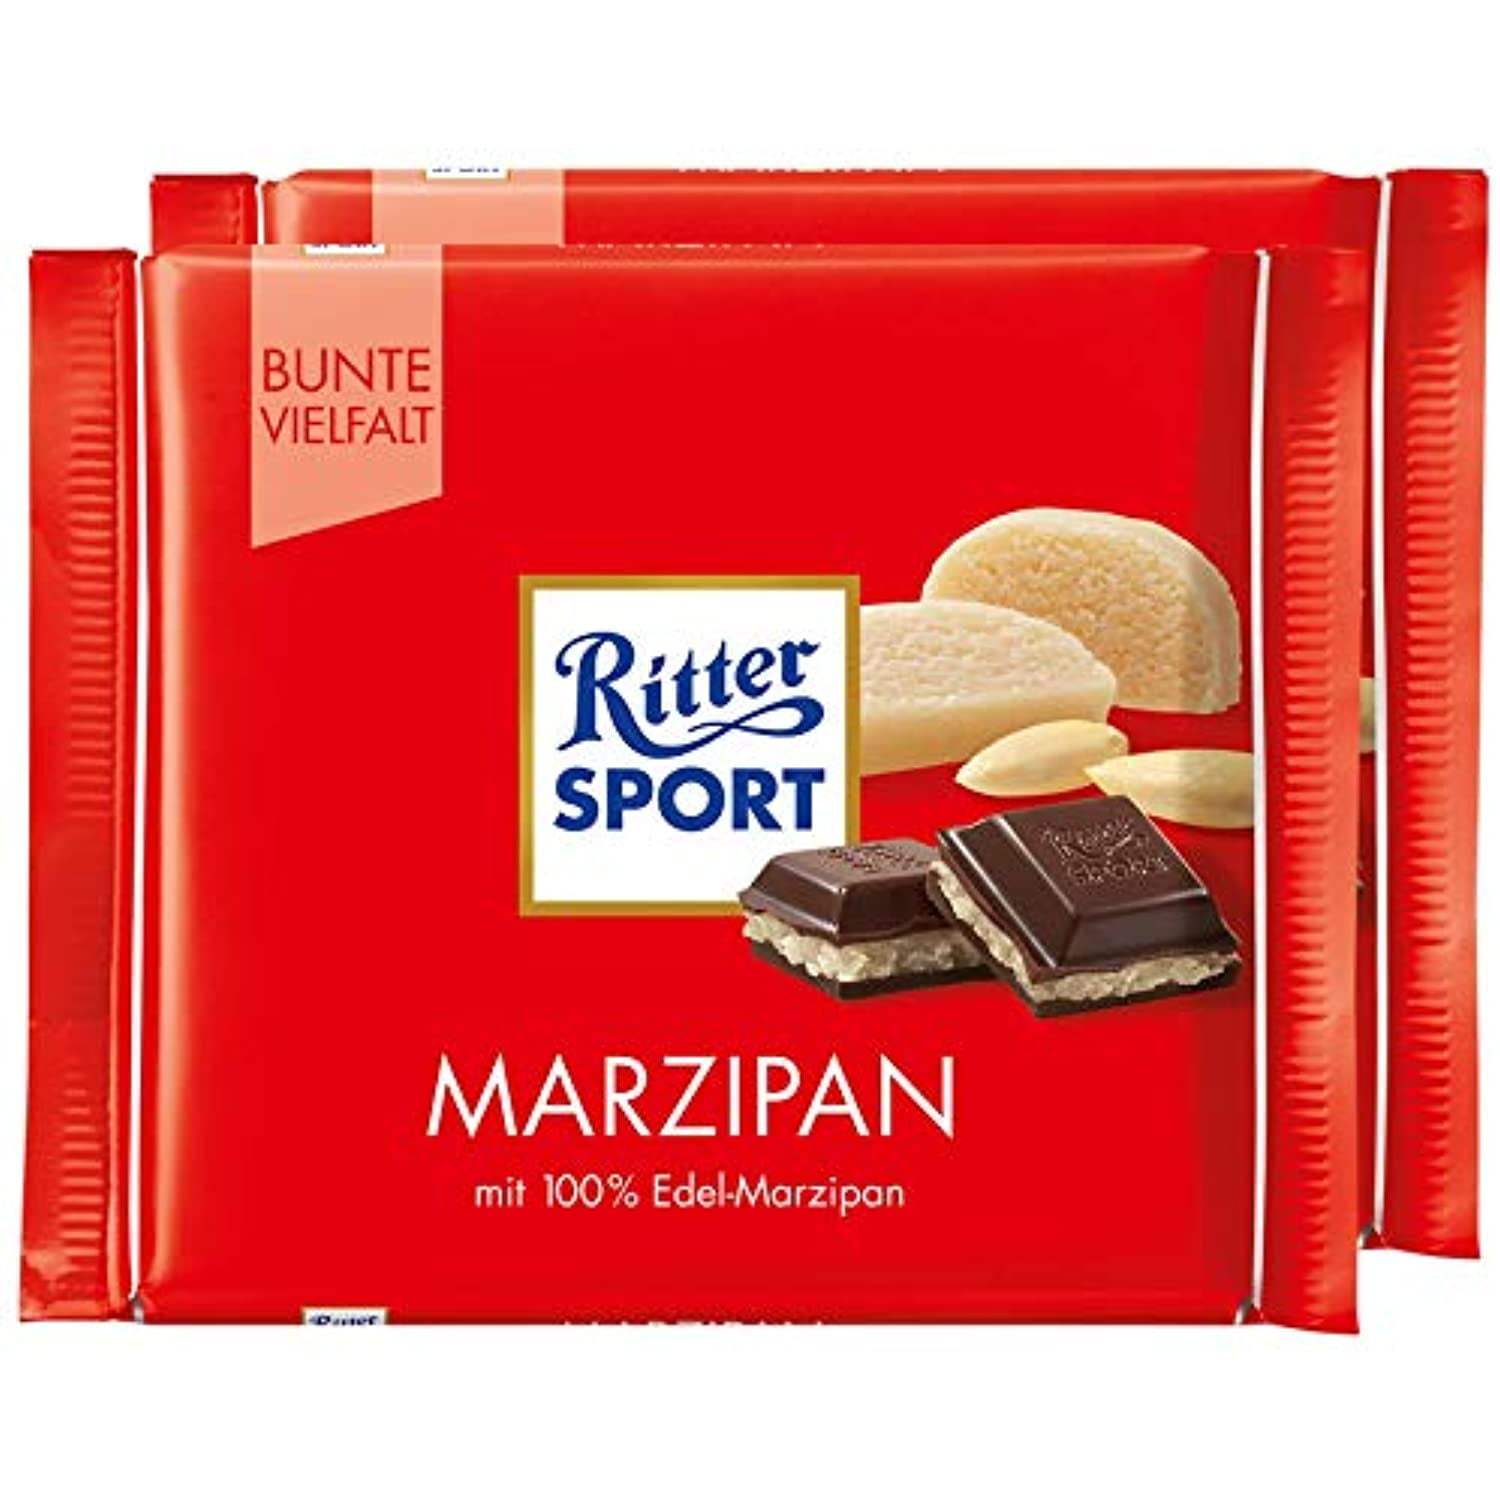 Ritter Sport Marzipan Dark Chocolate Bar Candy Original German Chocolate 100g/3.52oz (Pack of 2)